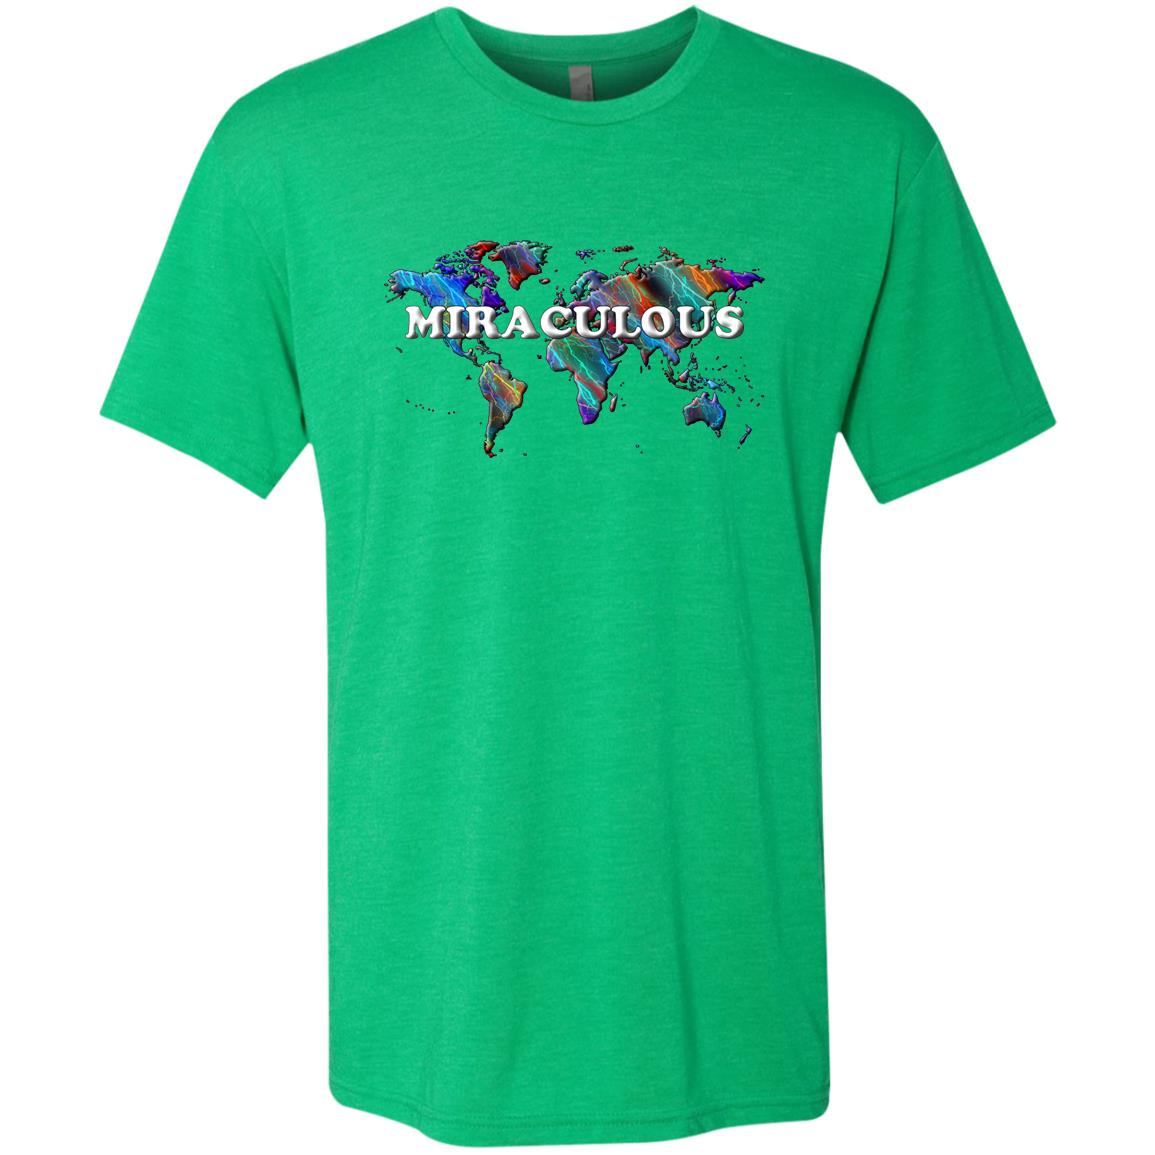 Miraculous Statement T-Shirt